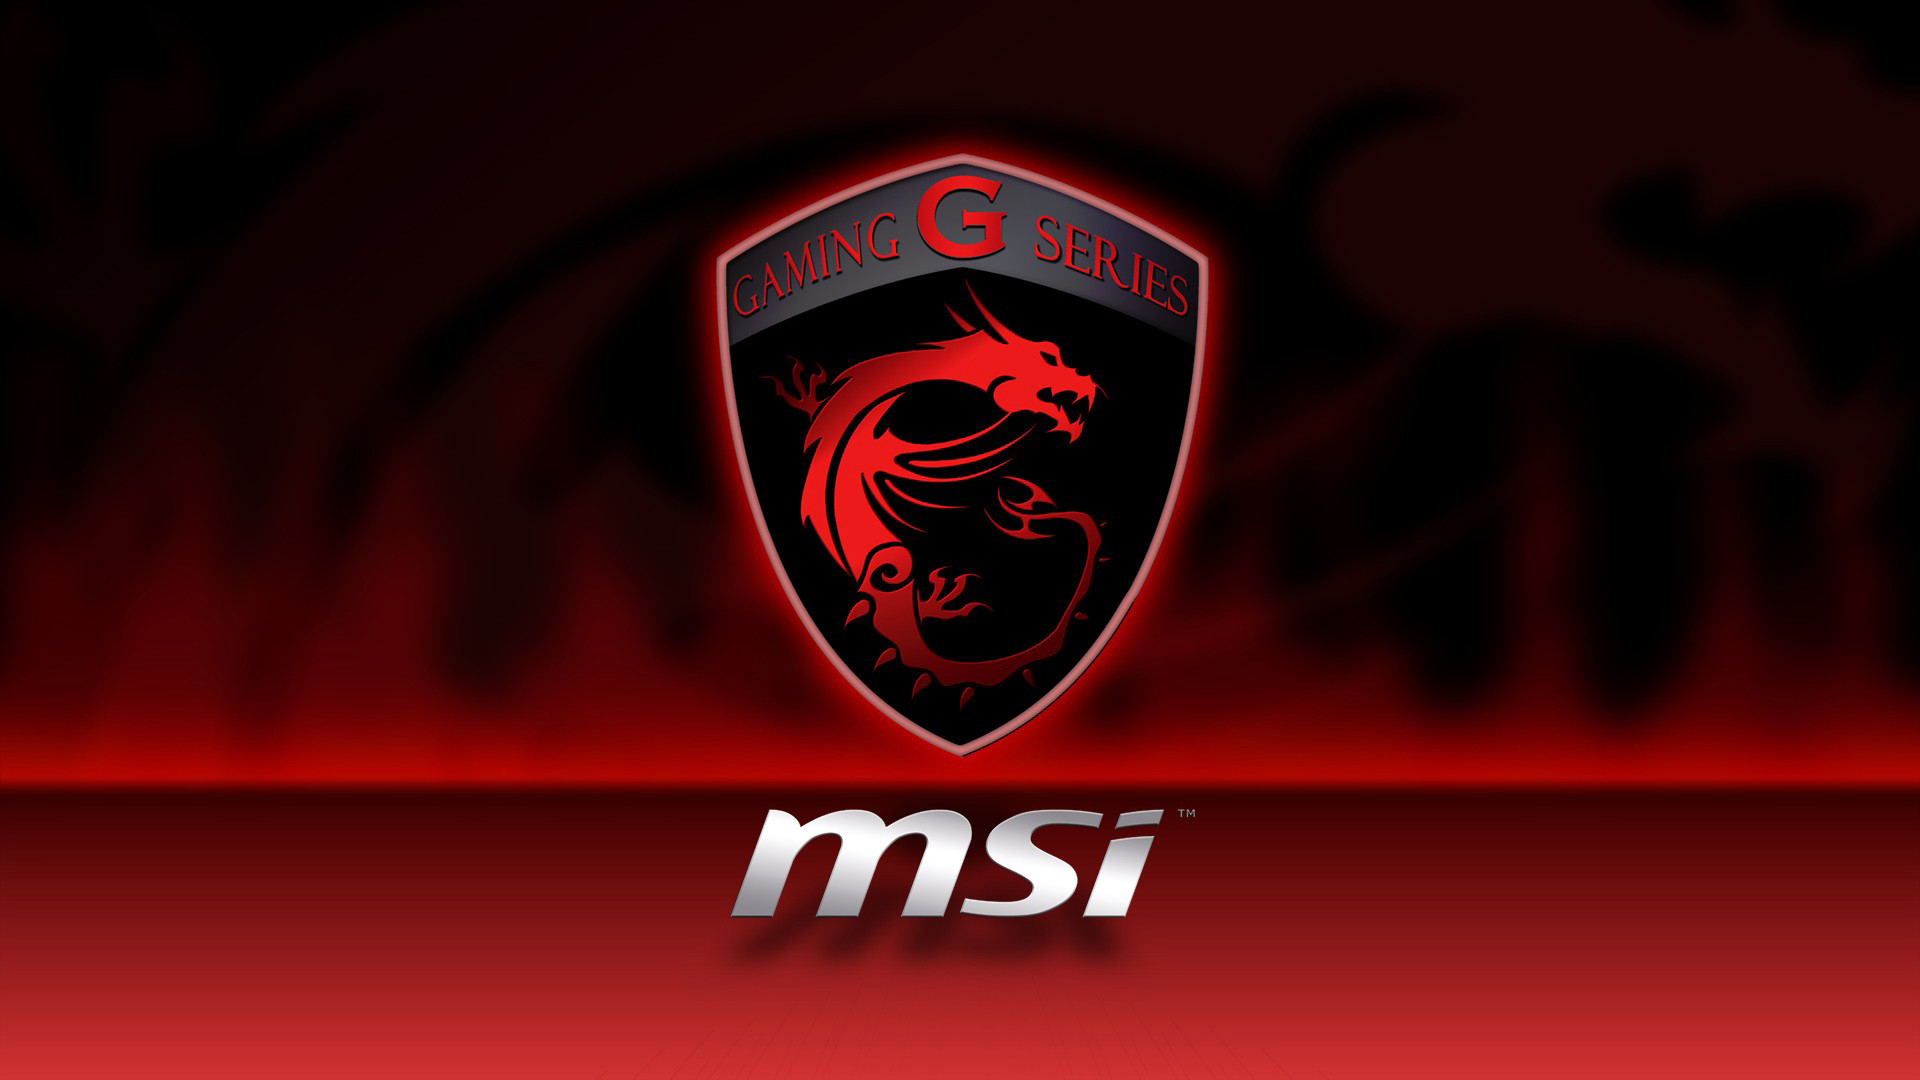 1920x1080 msi gaming g series dragon logo hd  1080p wallpaper 